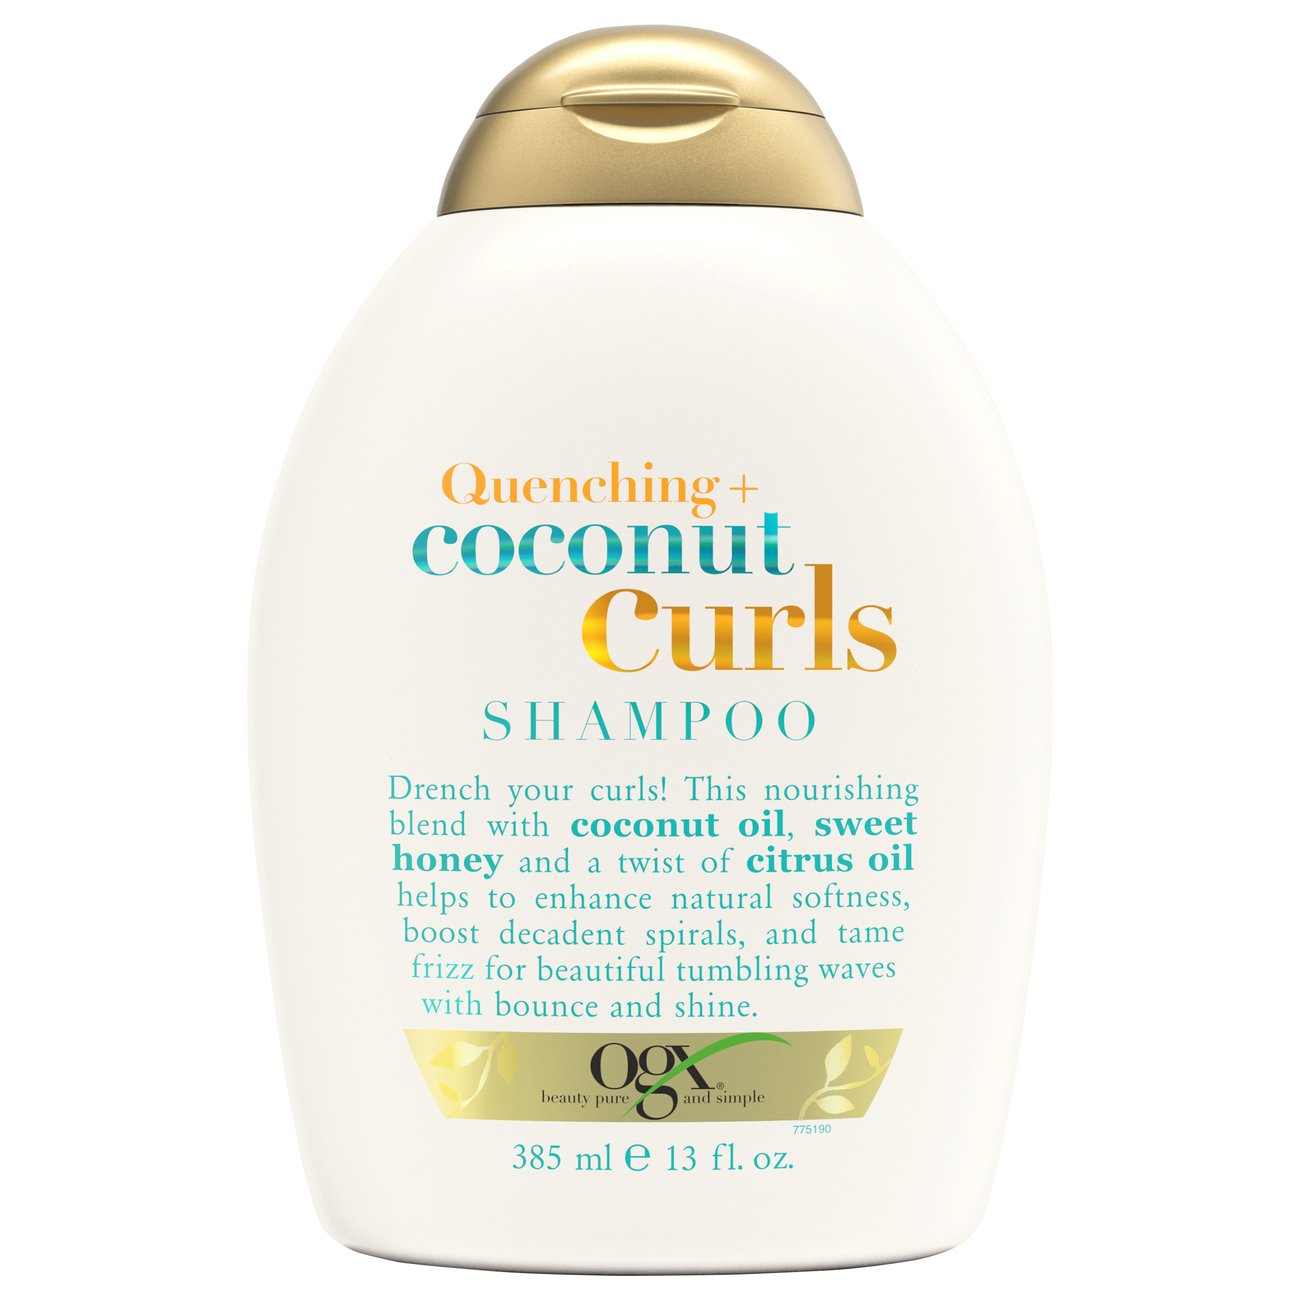 OGX Quenching Coconut Curls Shampoo - Shop Shampoo & Conditioner H-E-B